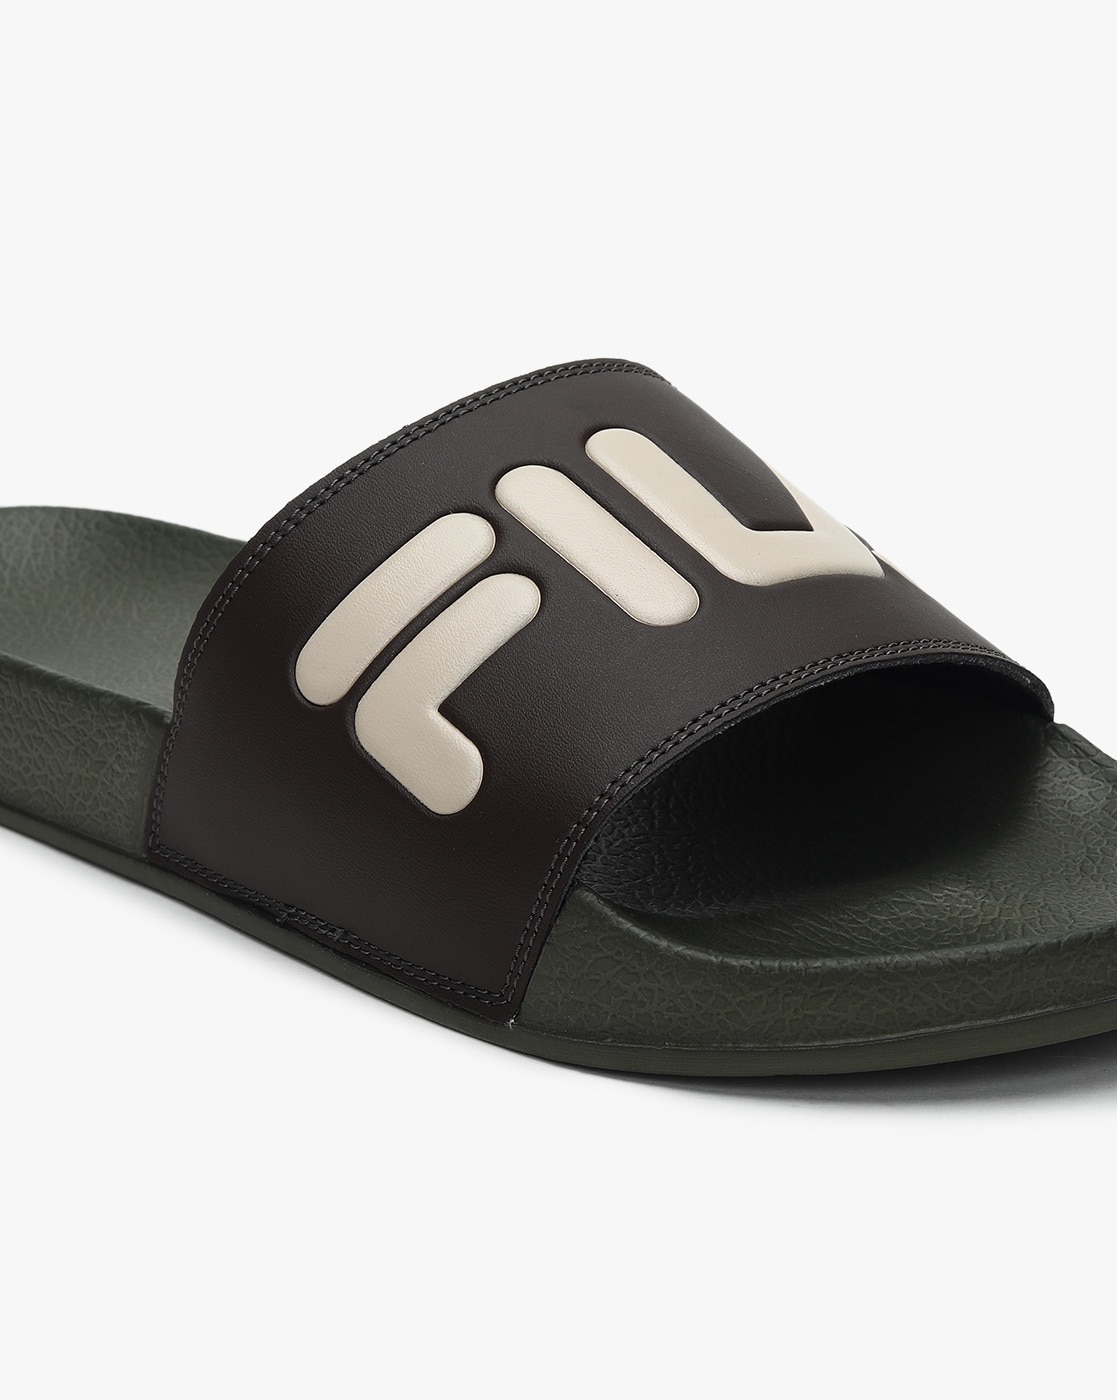 FILA Men FLIP FLOP Slippers - Buy Black Color FILA Men FLIP FLOP Slippers  Online at Best Price - Shop Online for Footwears in India | Flipkart.com